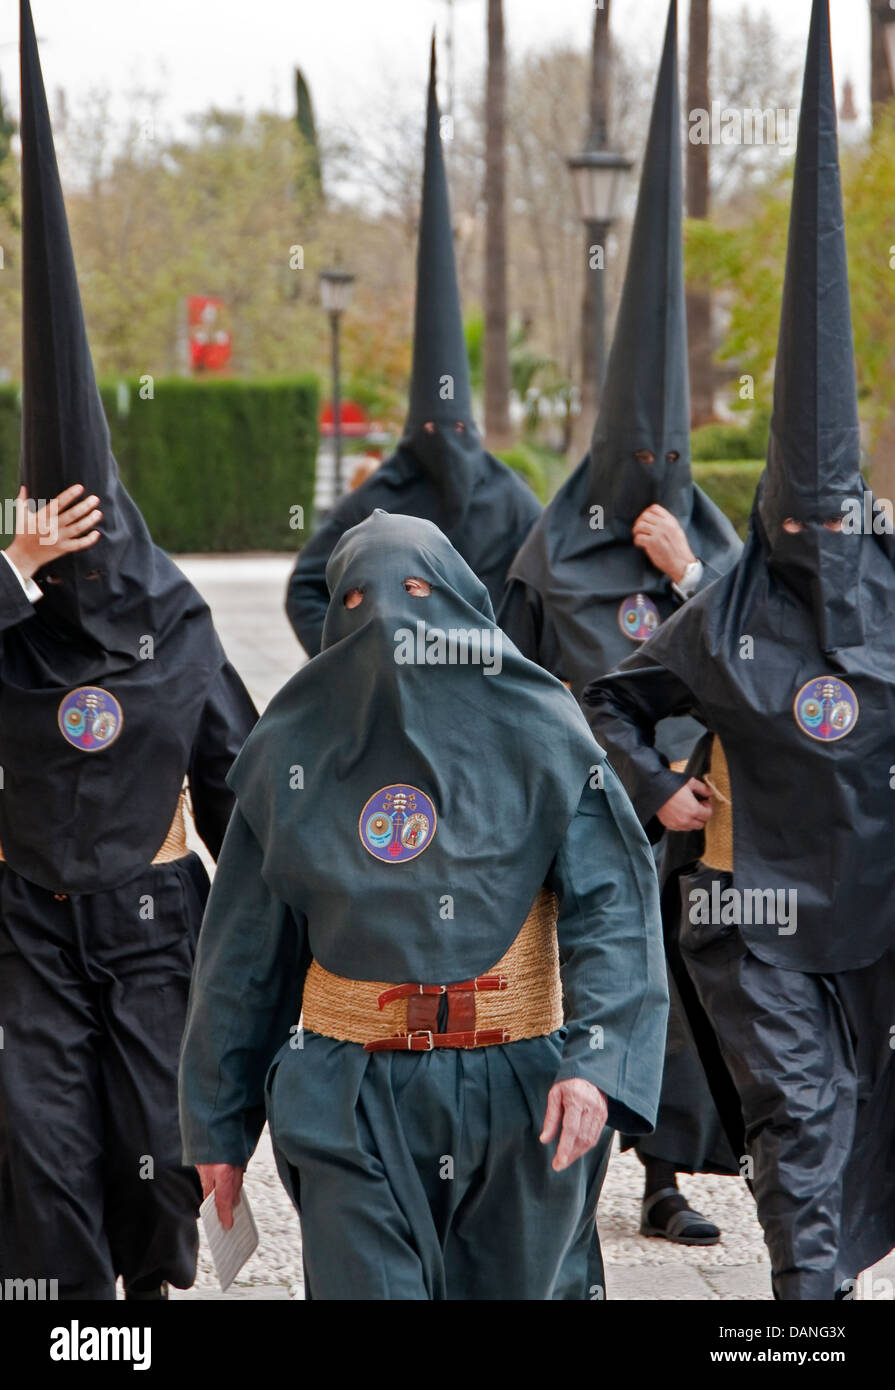 Semana Santa, (holy week) penitents (nazerenos) wearing robes and hoods in Seville, Spain. Stock Photo